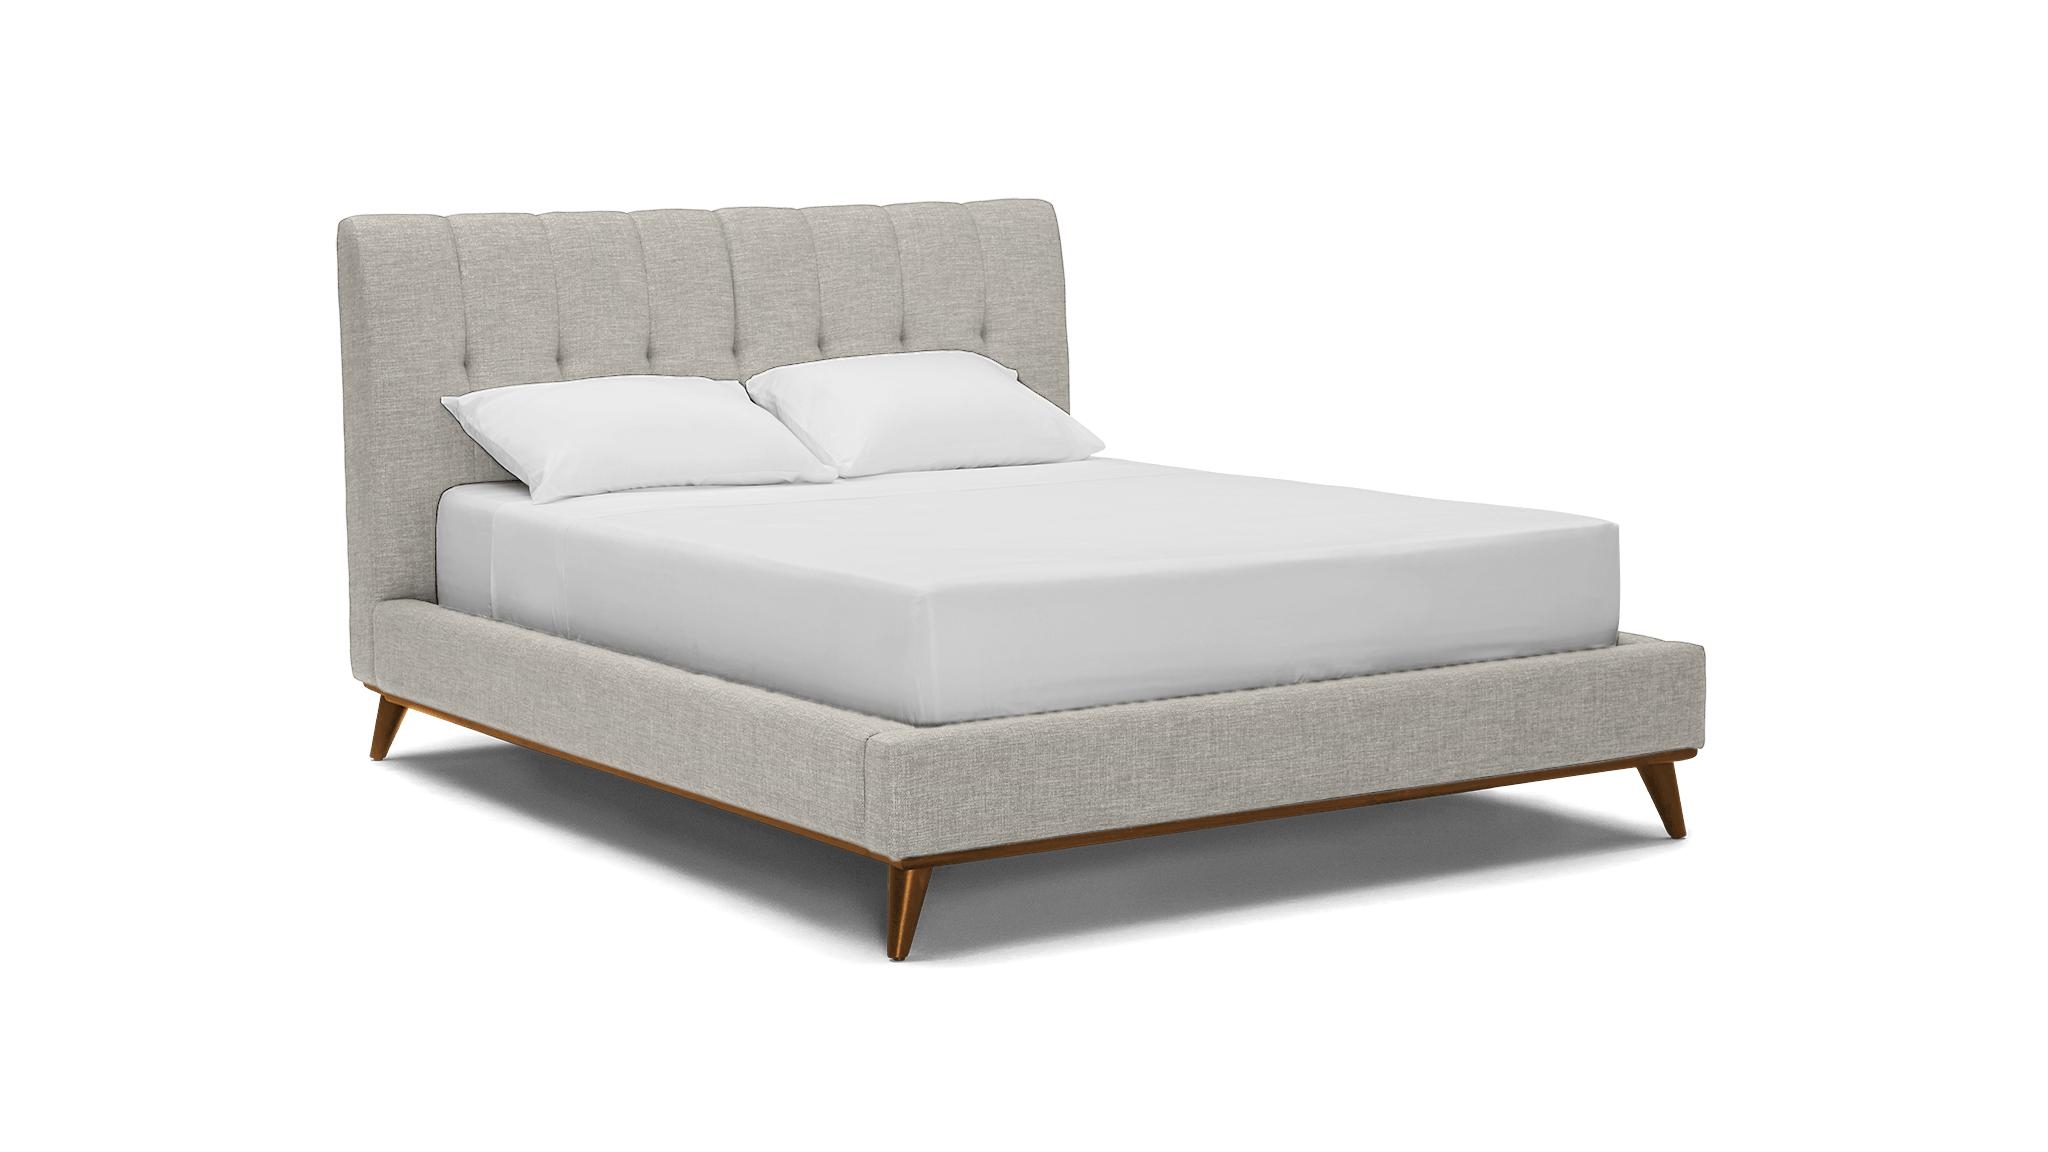 Gray Hughes Mid Century Modern Bed - Bloke Cotton - Mocha - Queen - Image 1